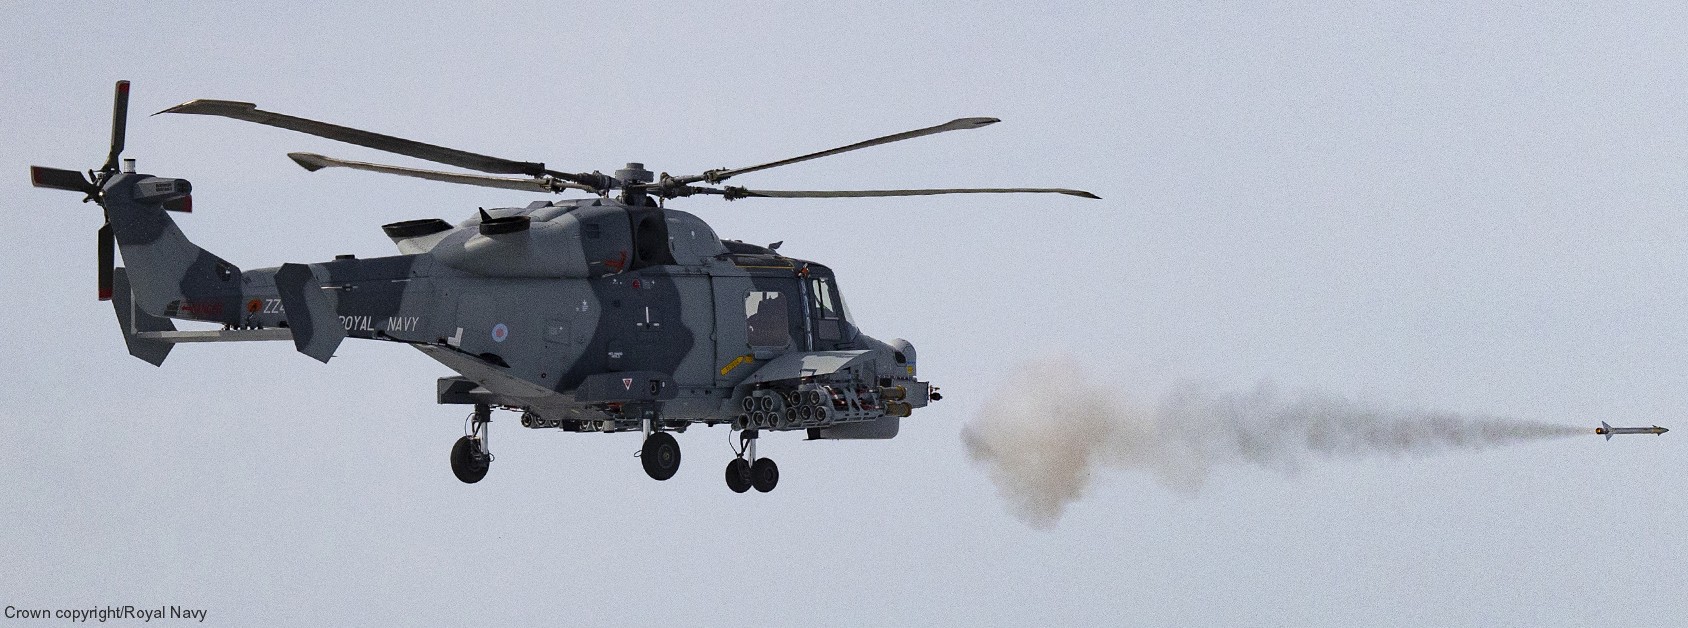 martlet lmm lightweight multirole missile royal navy thales wildcat hma2 helicopter 10